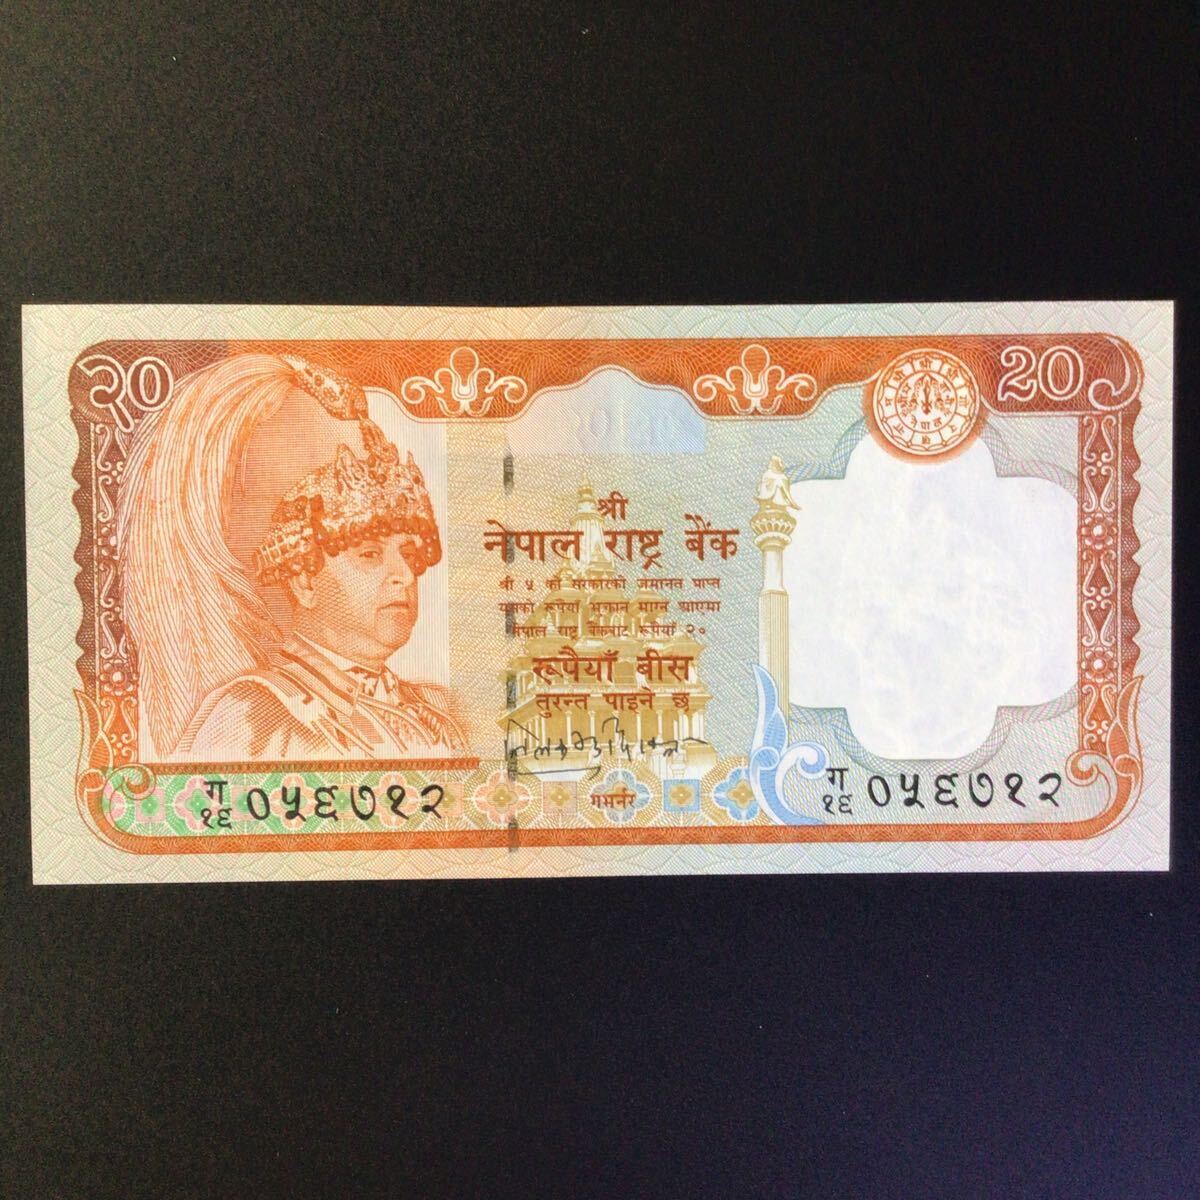 World Paper Money NEPAL 20 Rupees【2002】〔King Gyanendra Bir Bikram〕の画像1